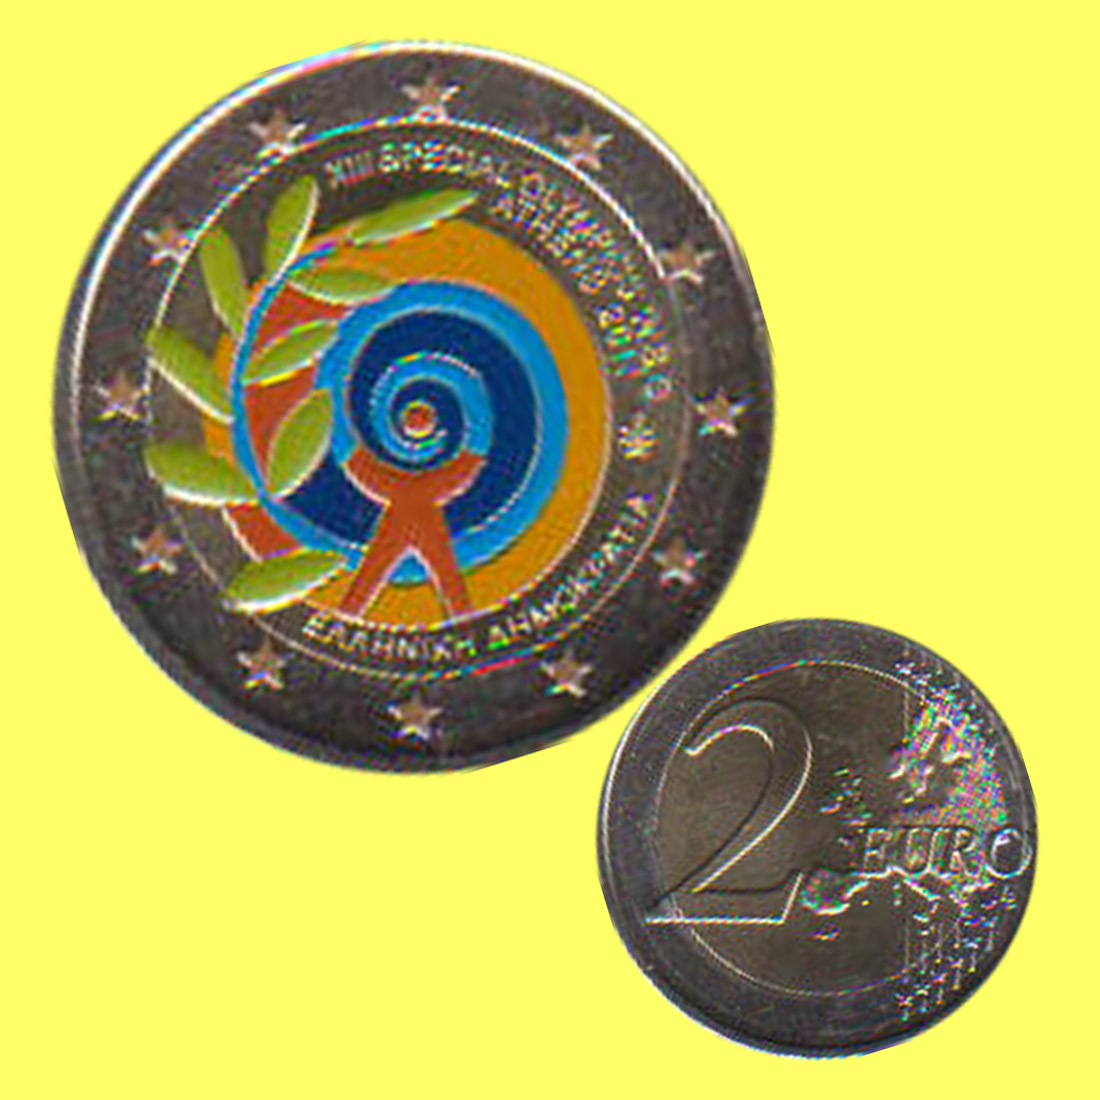  Griechenland 2-Euro-Sondermünze mit Farb-Disign *Paralympics* 2011   